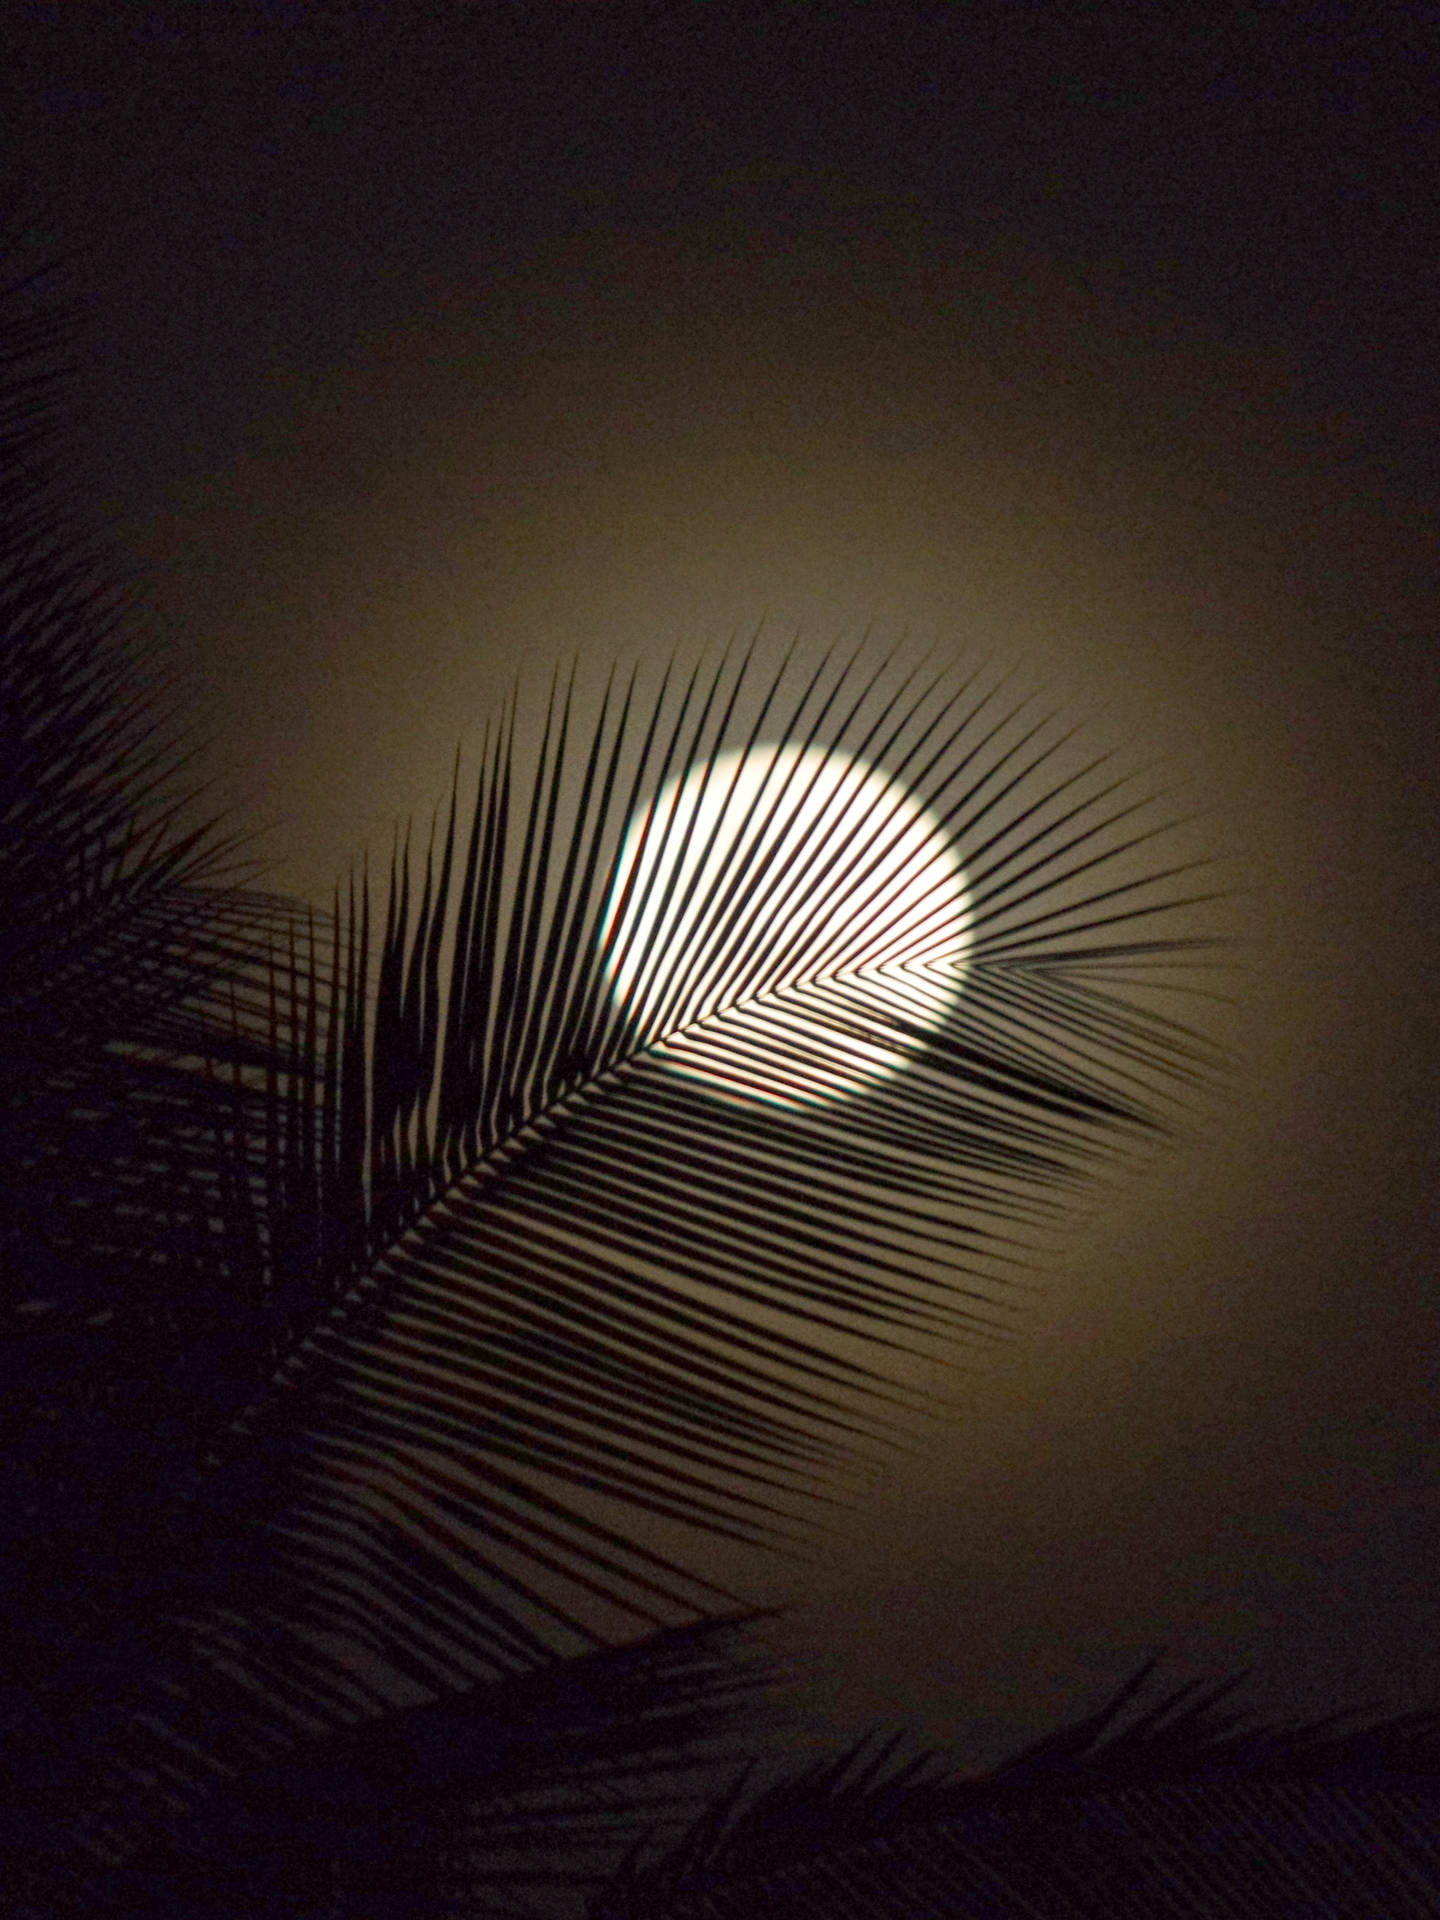 Hd Moon Behind Palm Leaves